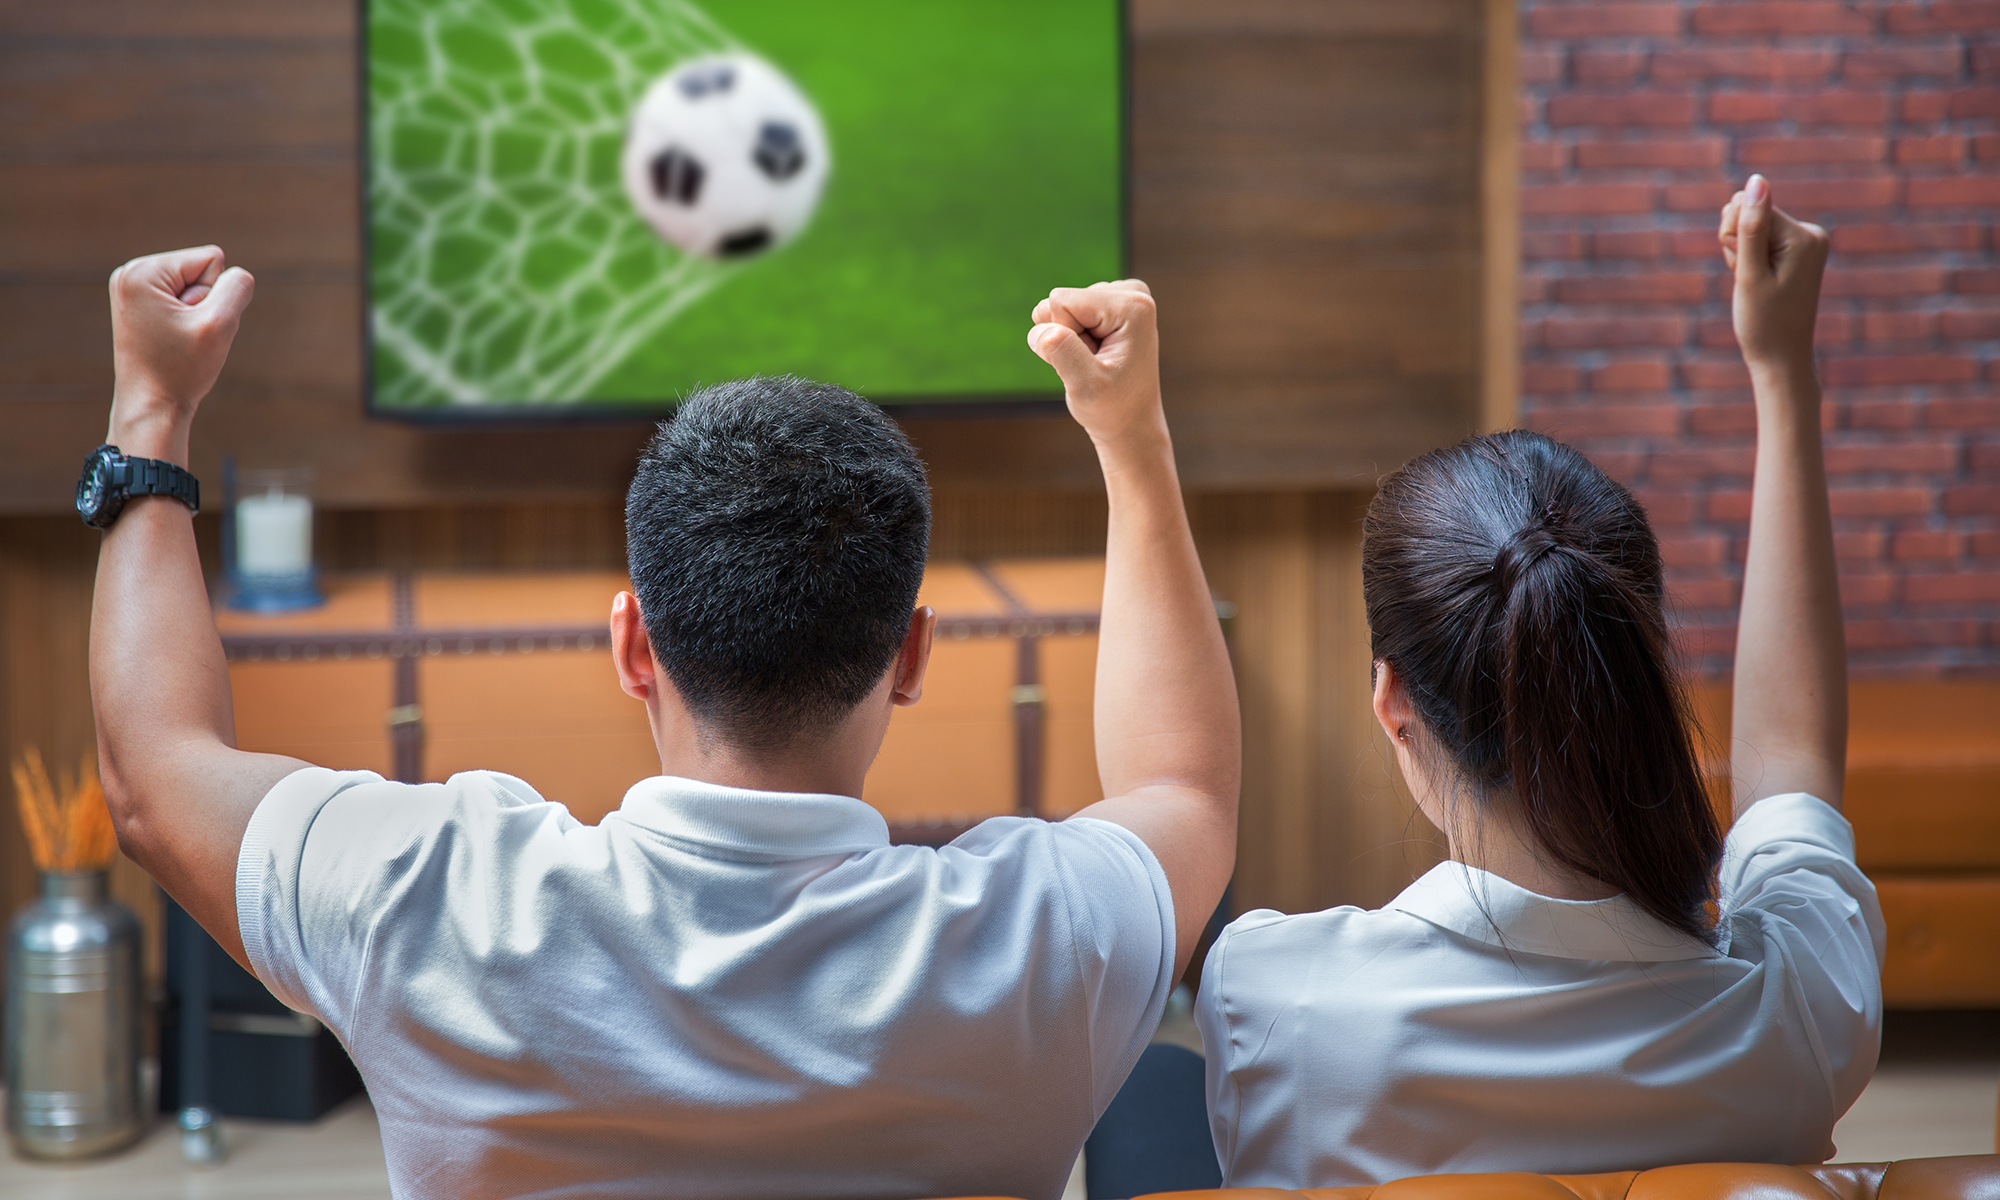 Live match watch. Футбол по телевизору. Фотостоки футбол. Телевизор футбол. Парни смотрят футбол.